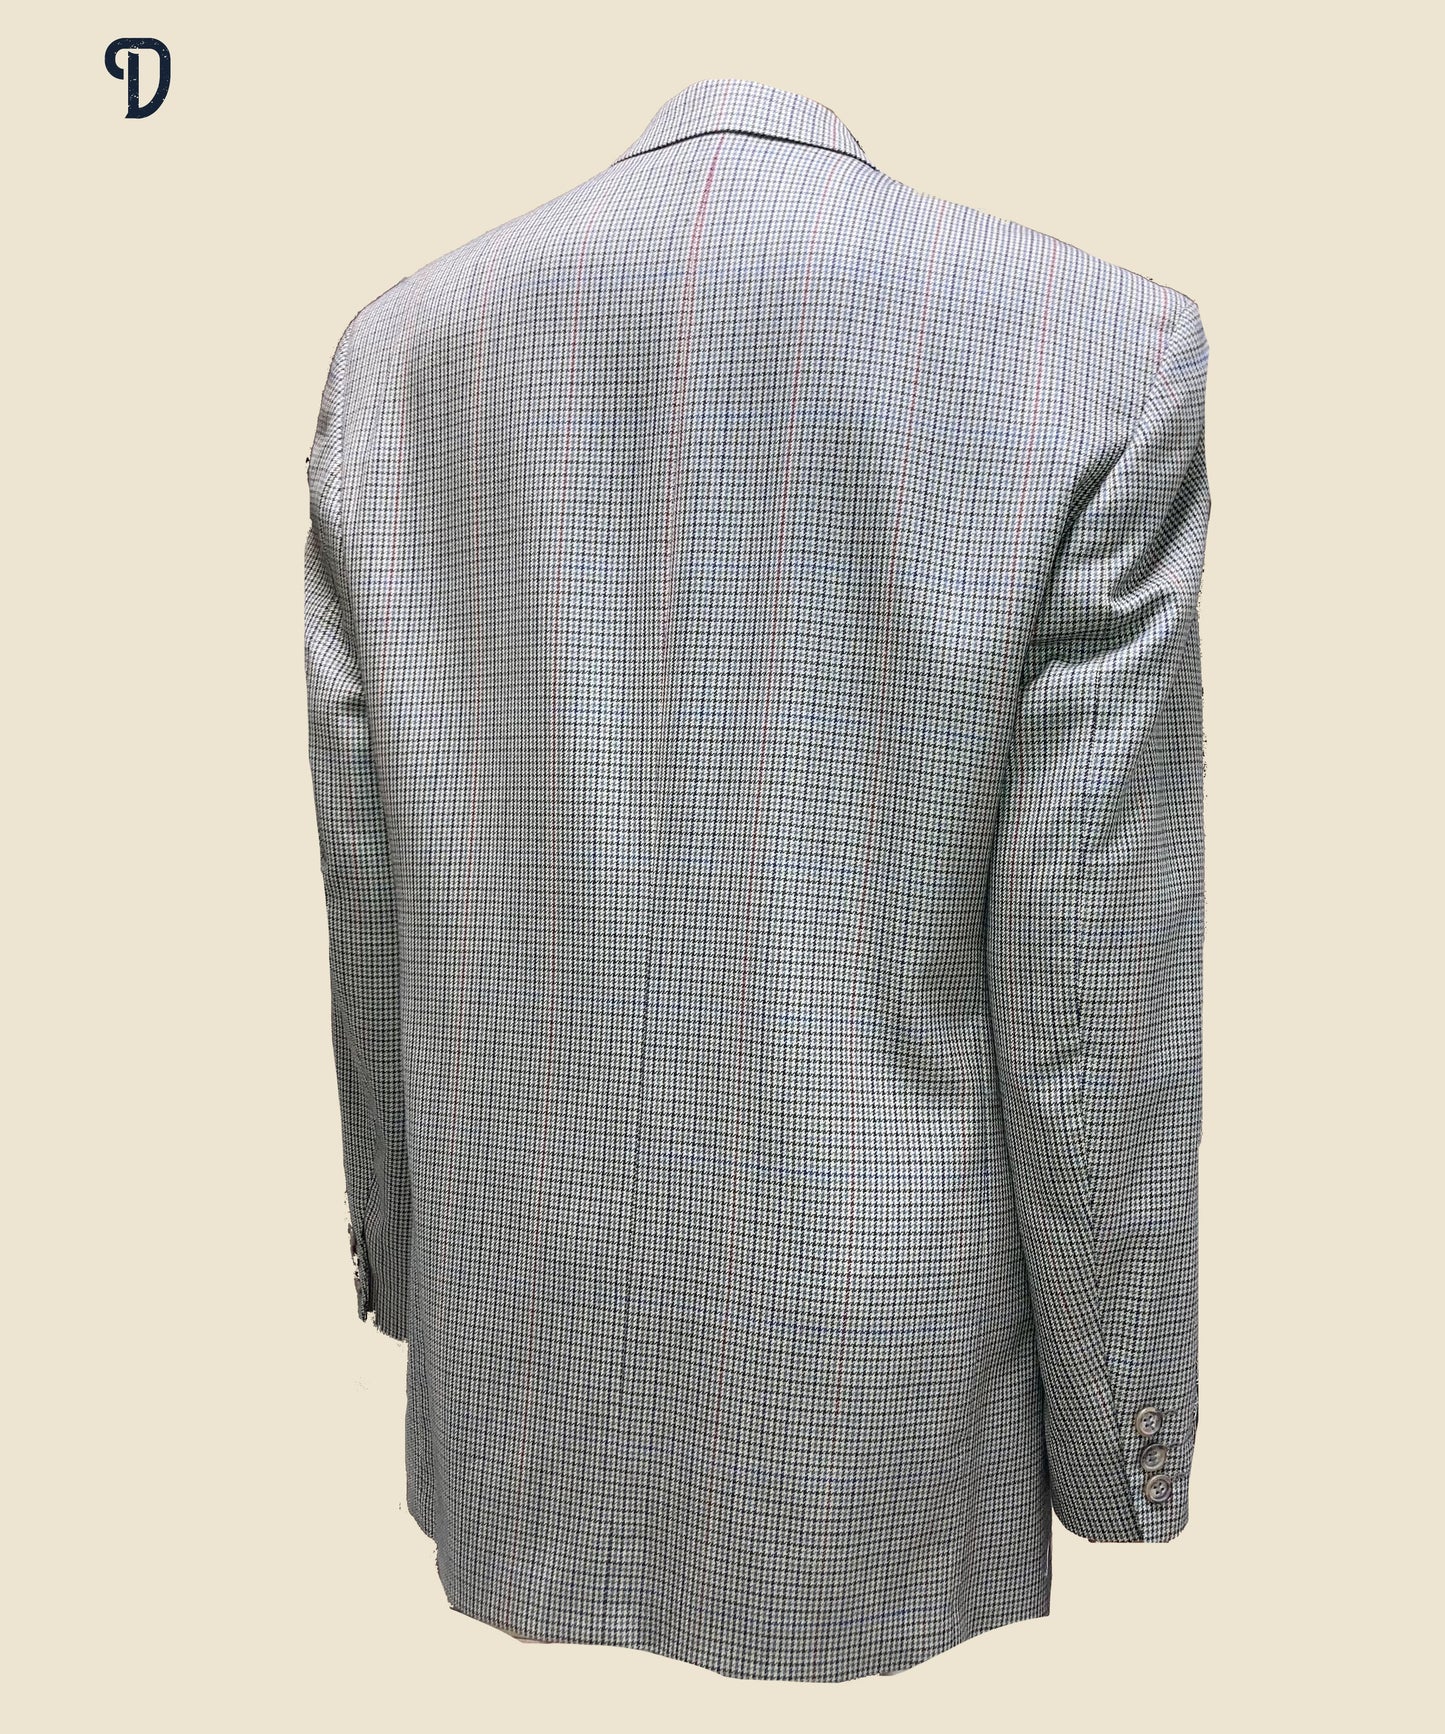 Reimagined Suit Jacket (Size Medium)